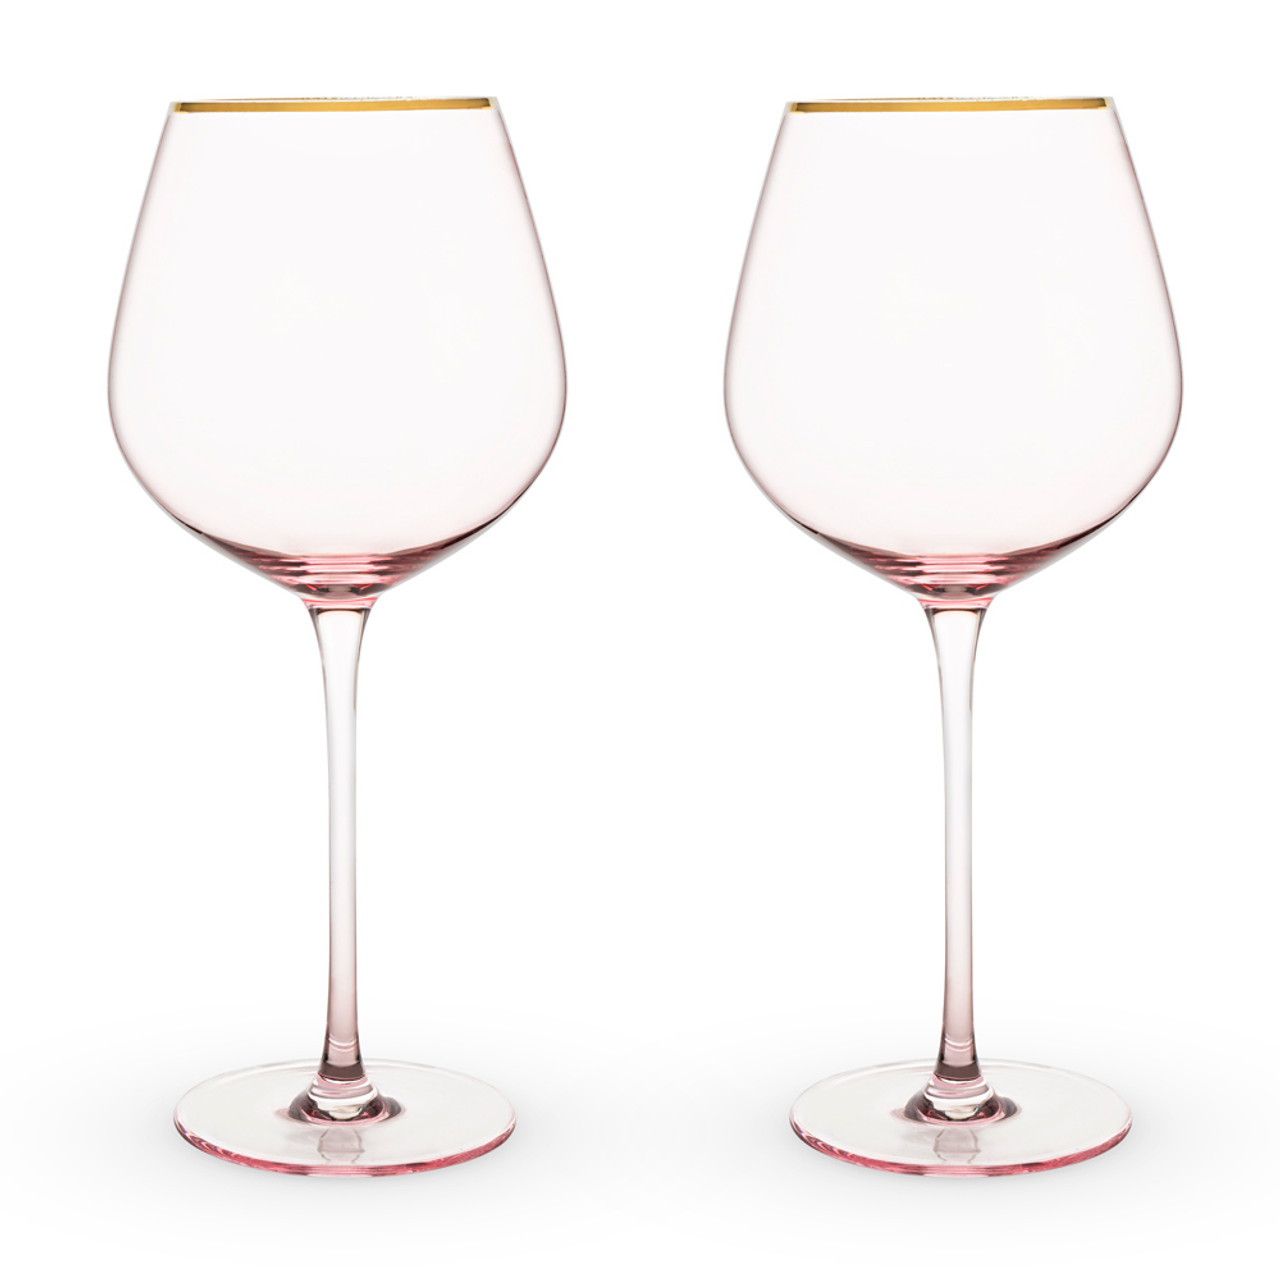 20-inch Giant Copper Tone Wine Glass/Champagne Magnum Chiller